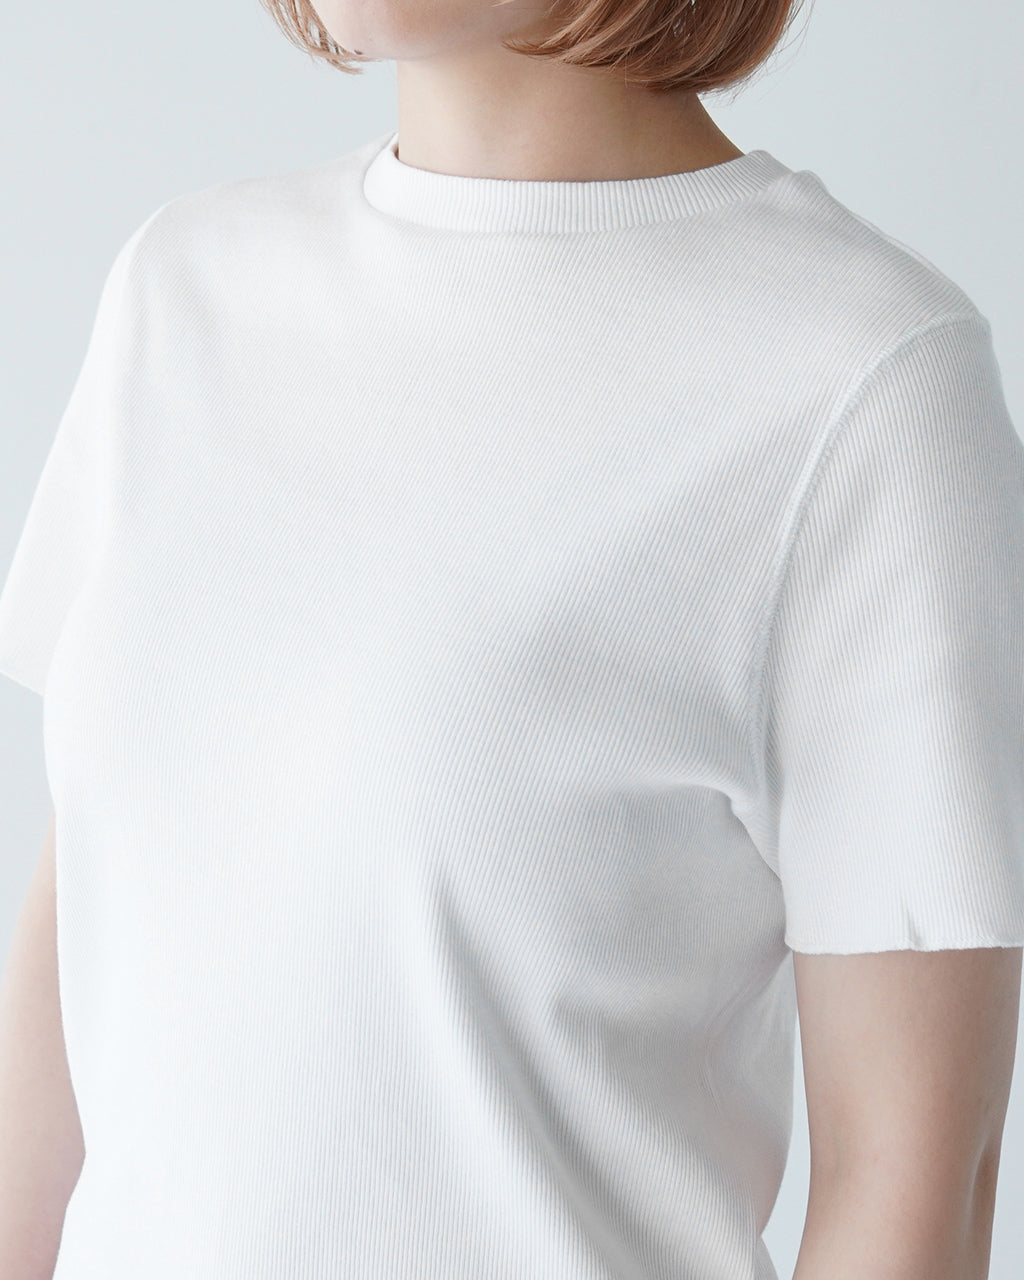 THE SHINZONE シンゾーン コンパクト リブ Tシャツ COMPACT RIB TEE カットソー 24MMSCU06【送料無料】